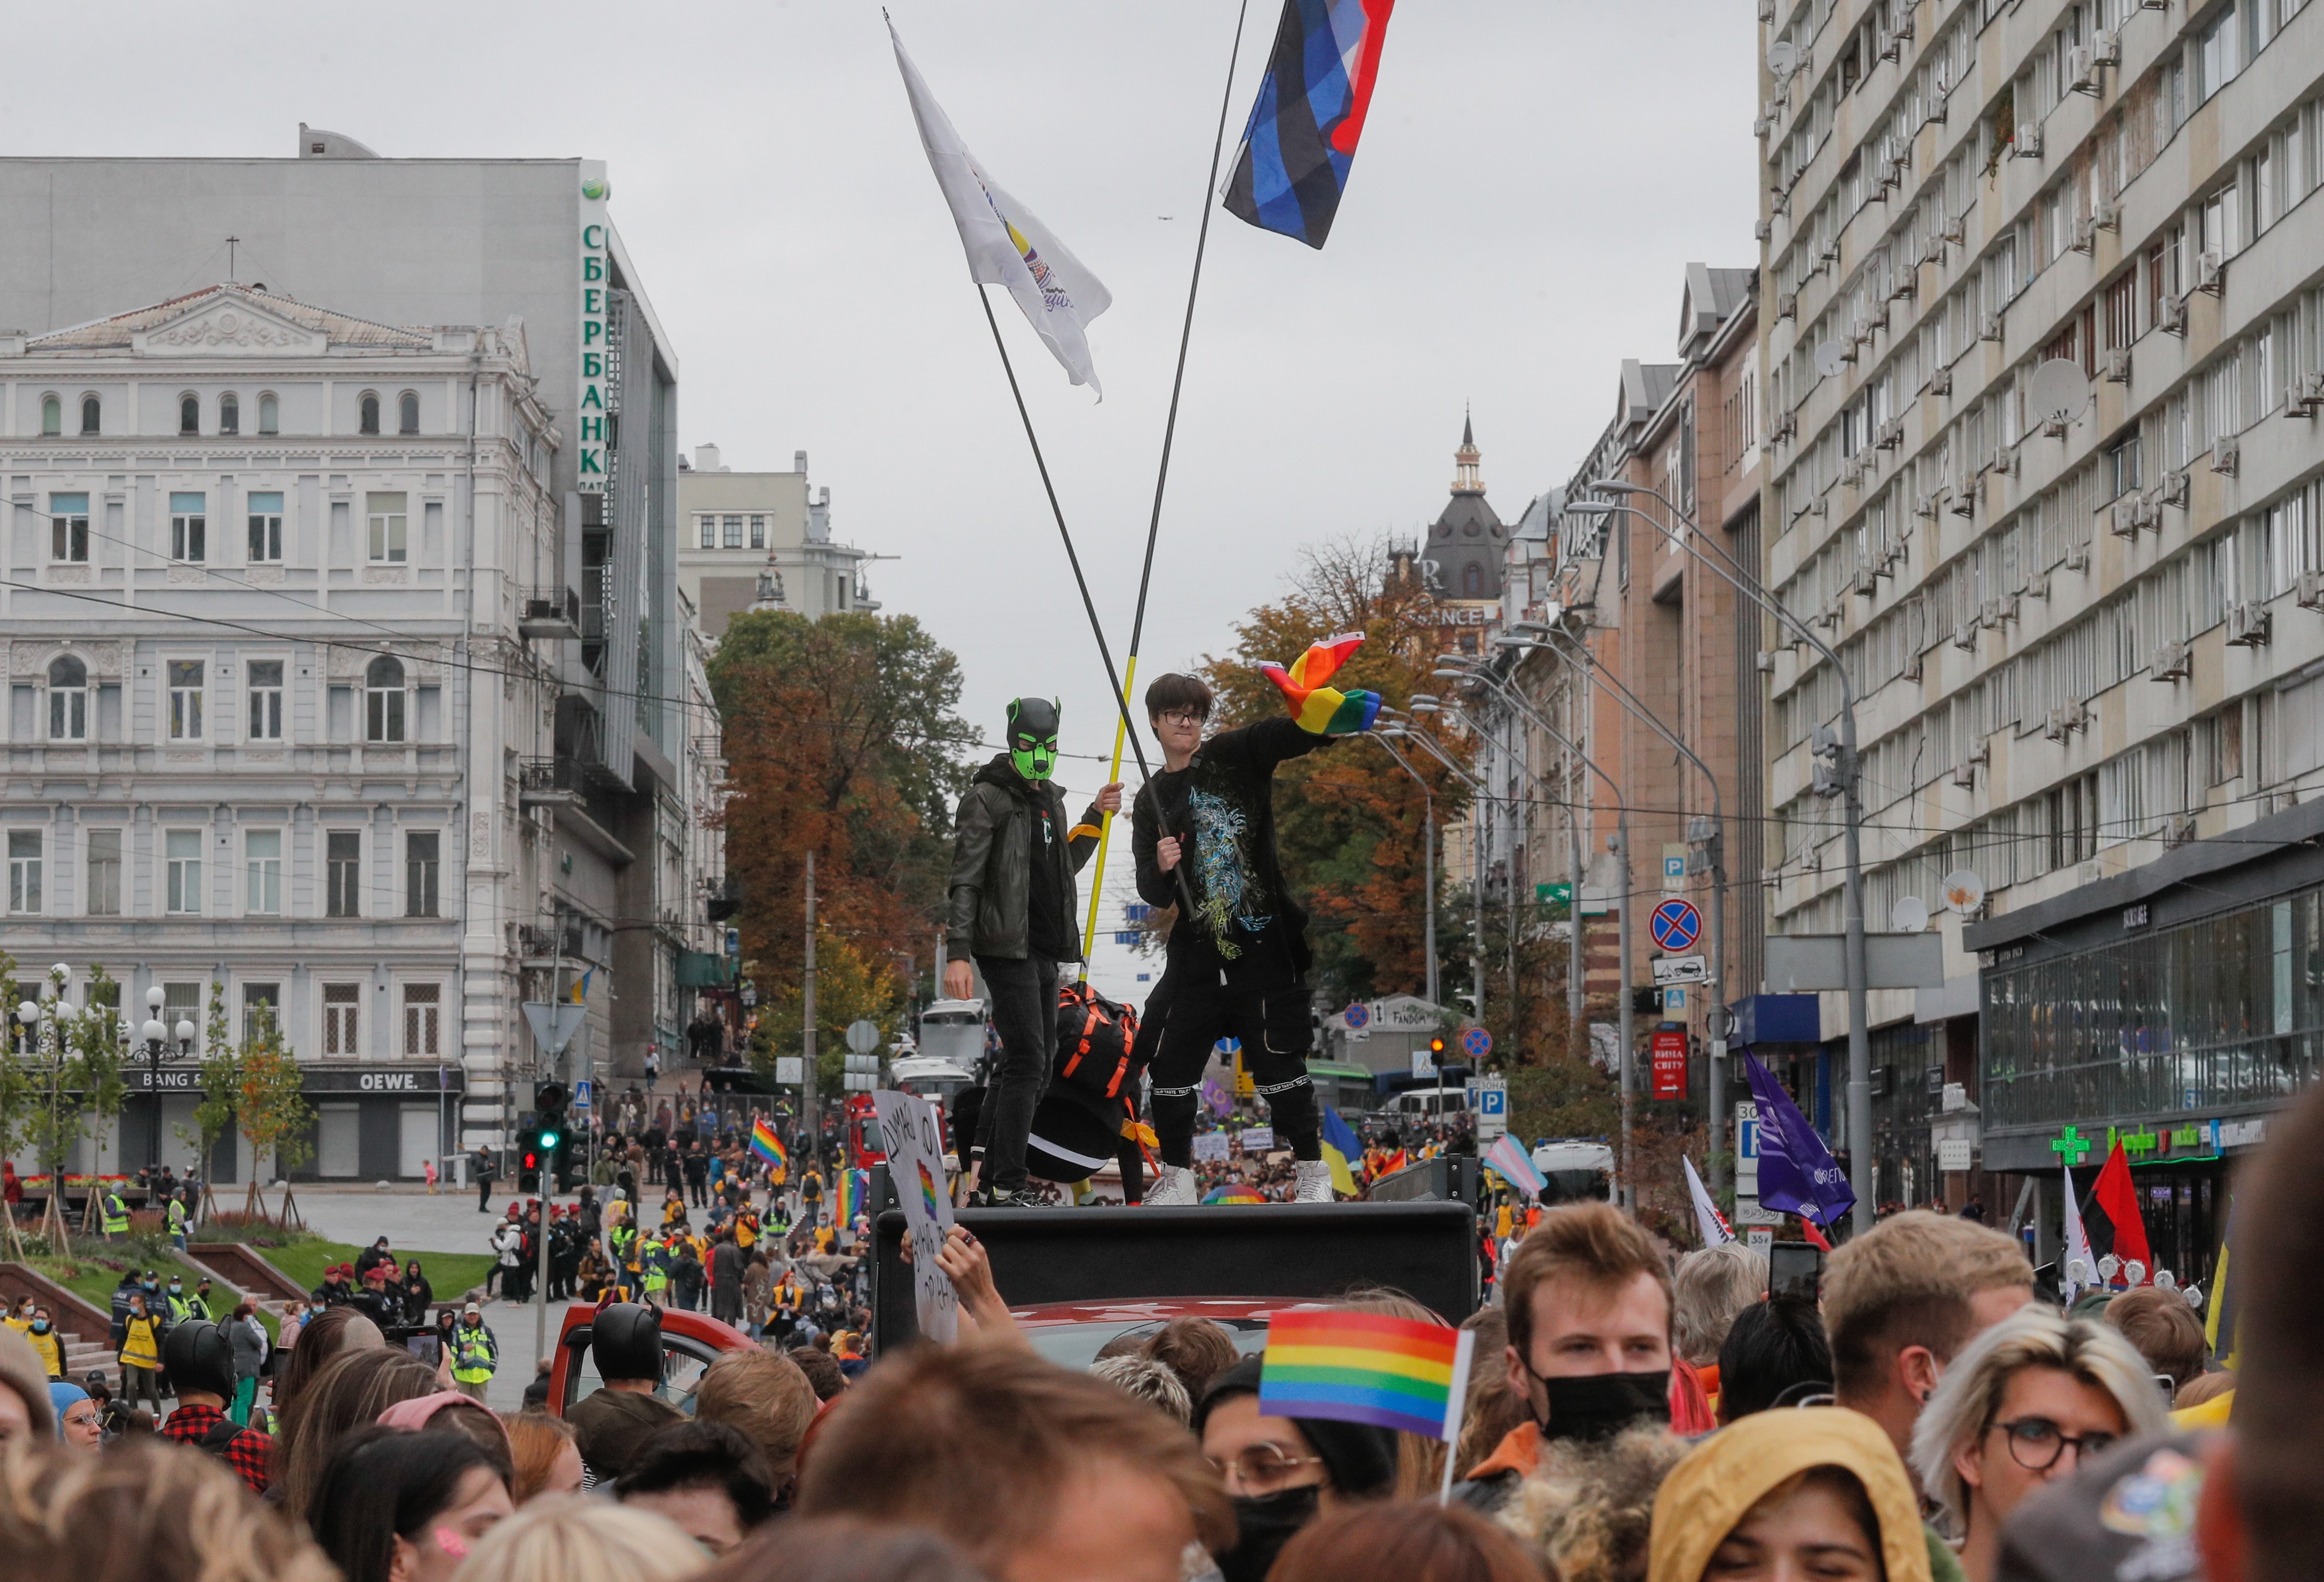 A scene from the Pride March in kyiv held last year (EFE/EPA/SERGEY DOLZHENKO)